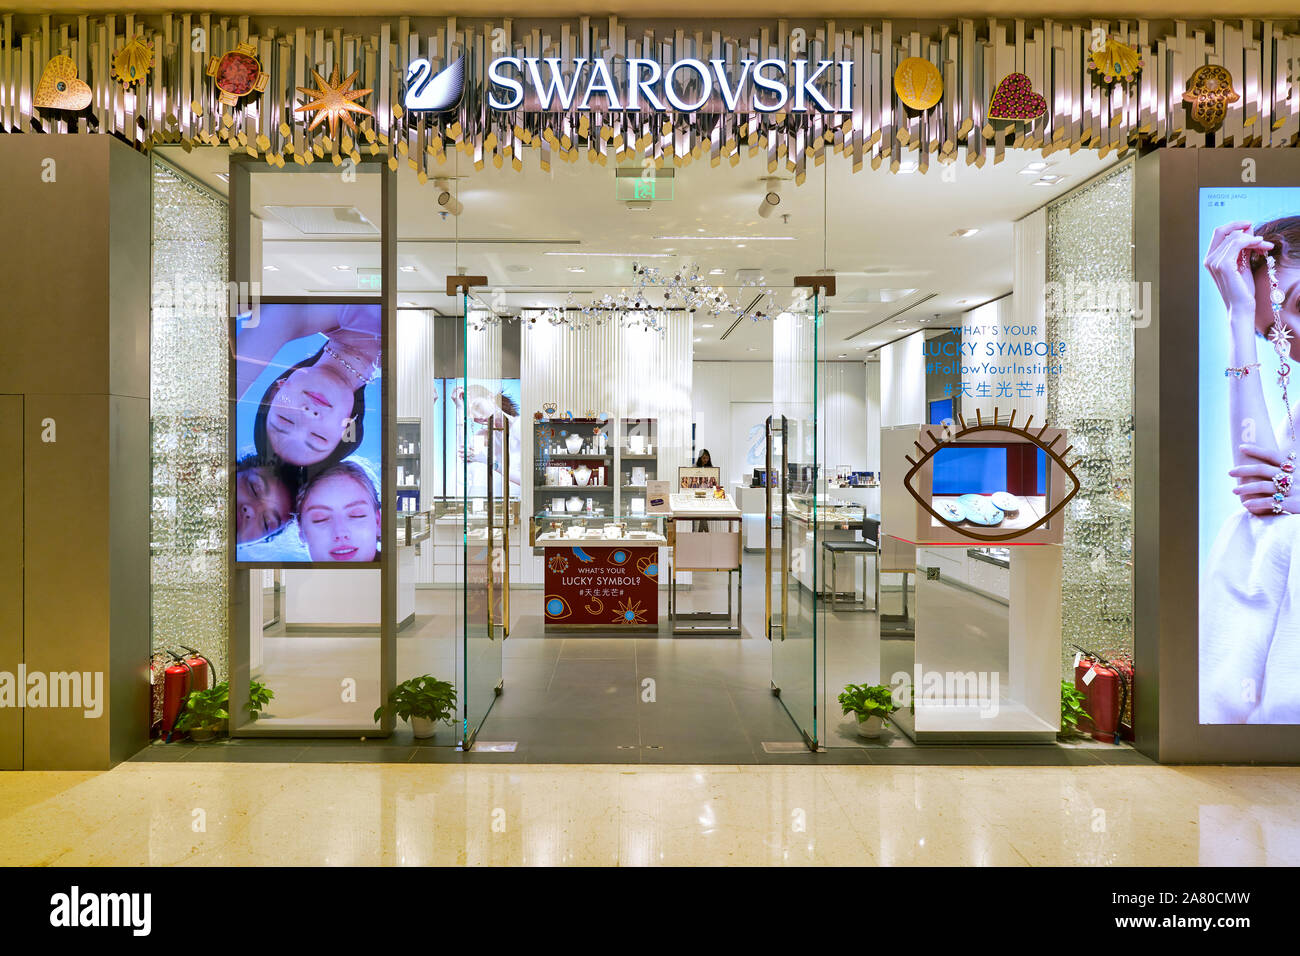 Swarovski Shop Shopping Mall Fotos e Imágenes de stock - Alamy